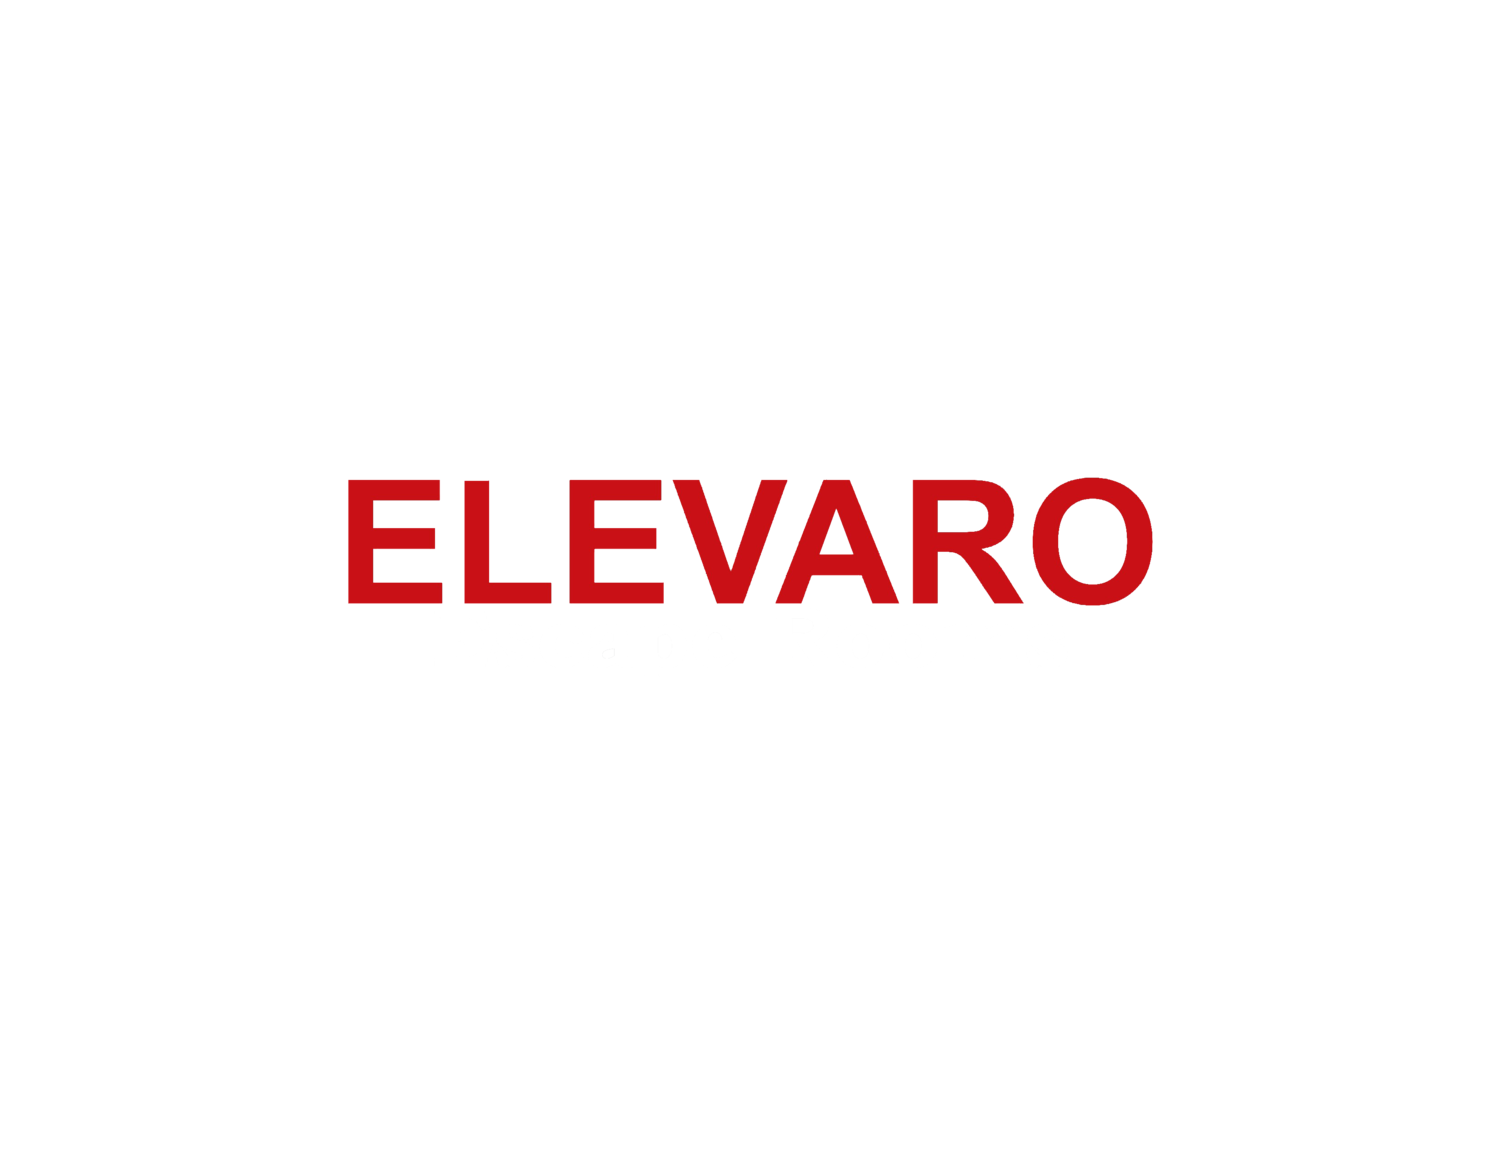 Elevaro Escape Rooms - Winkler, Manitoba.